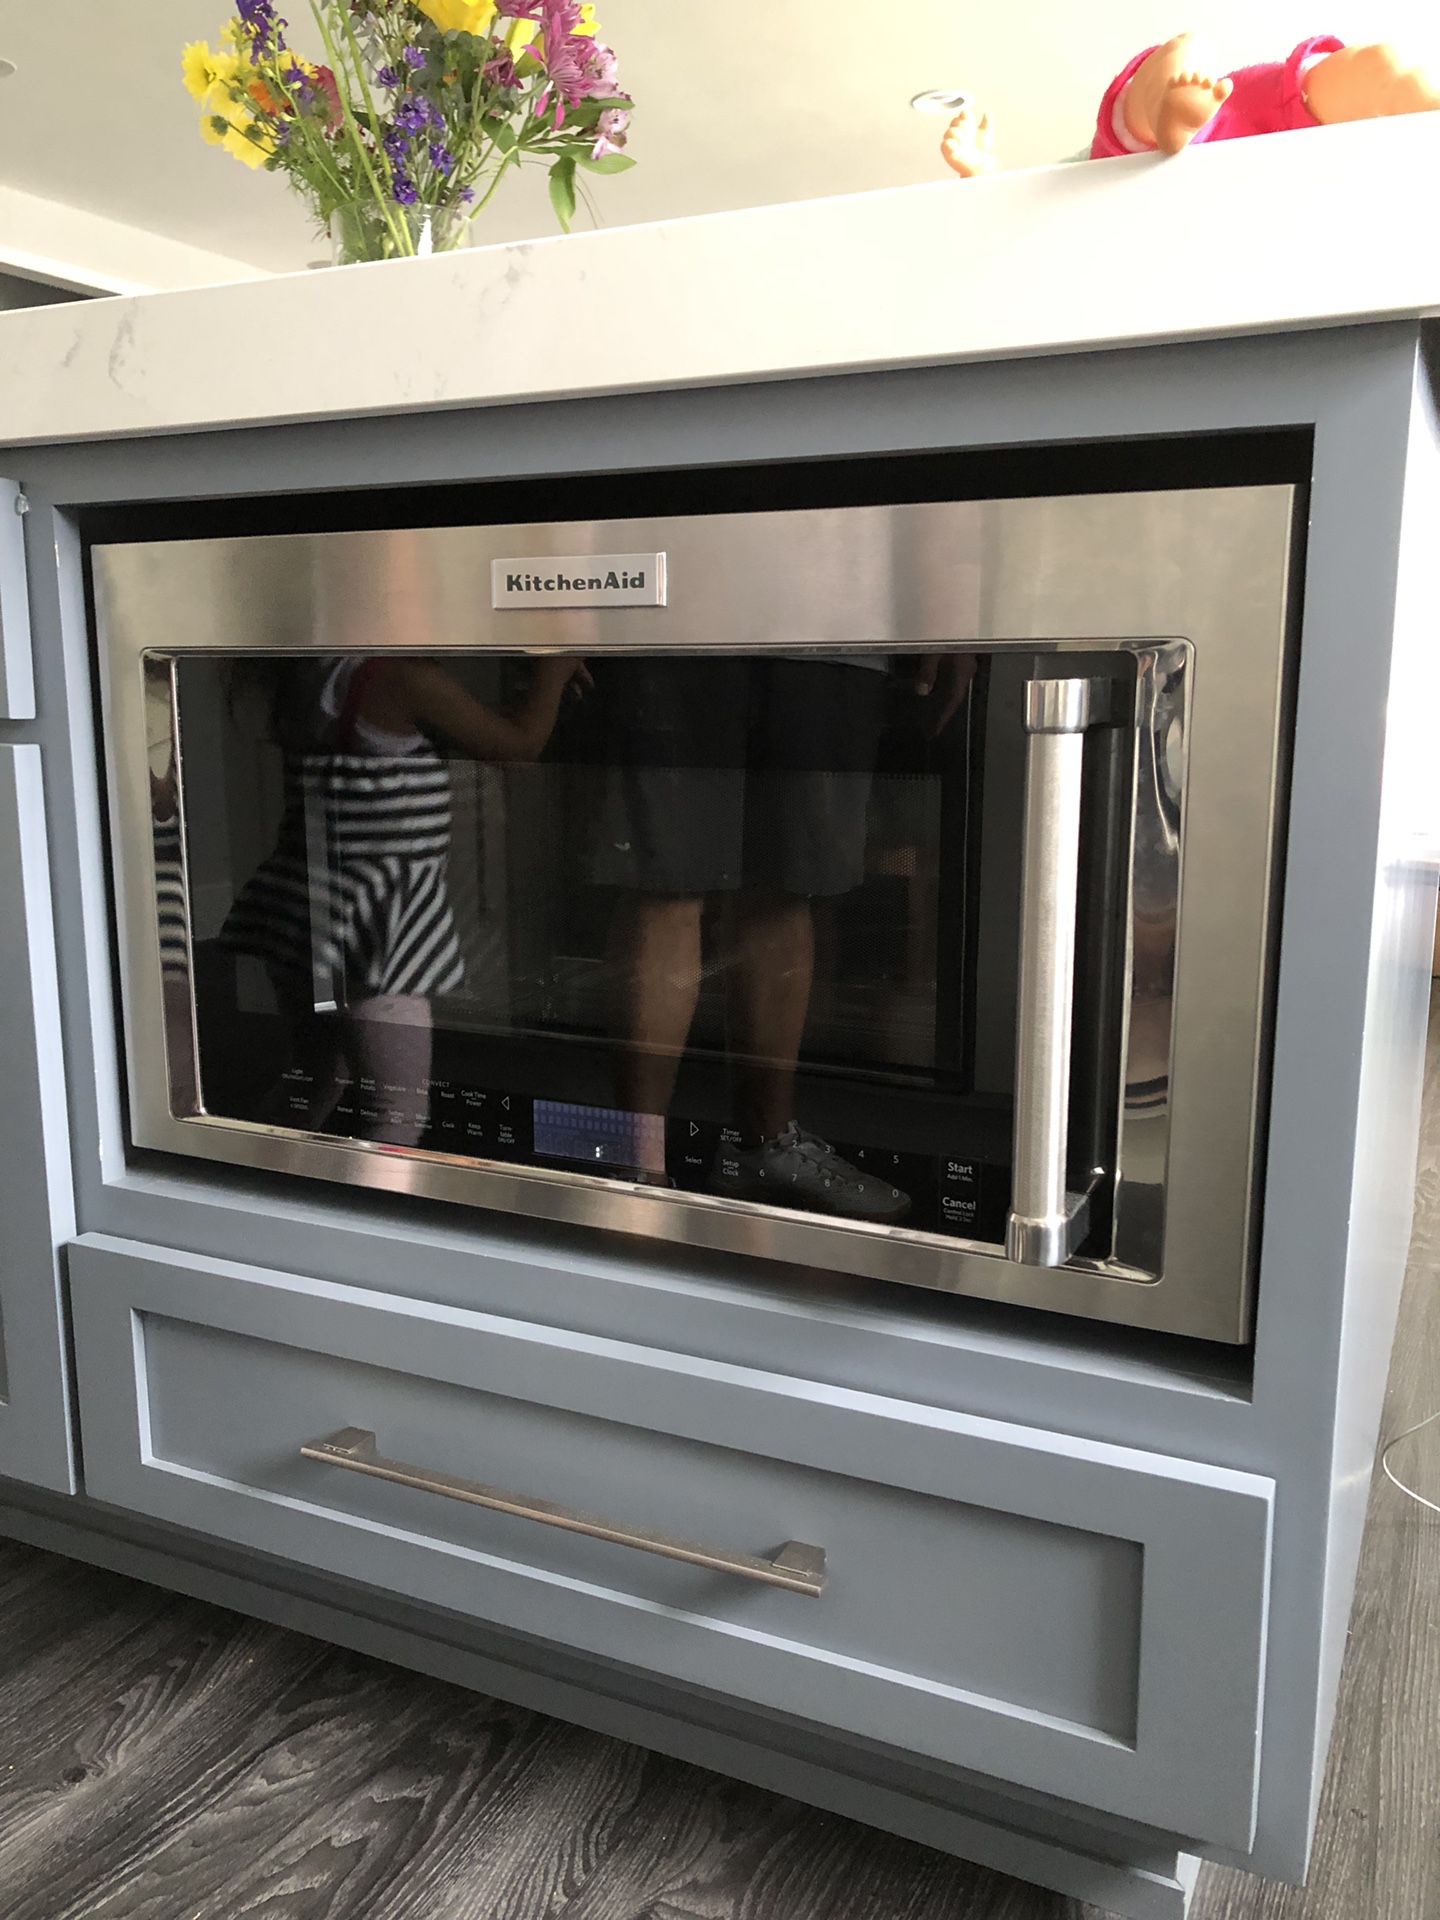 Like-new KitchenAid microwave